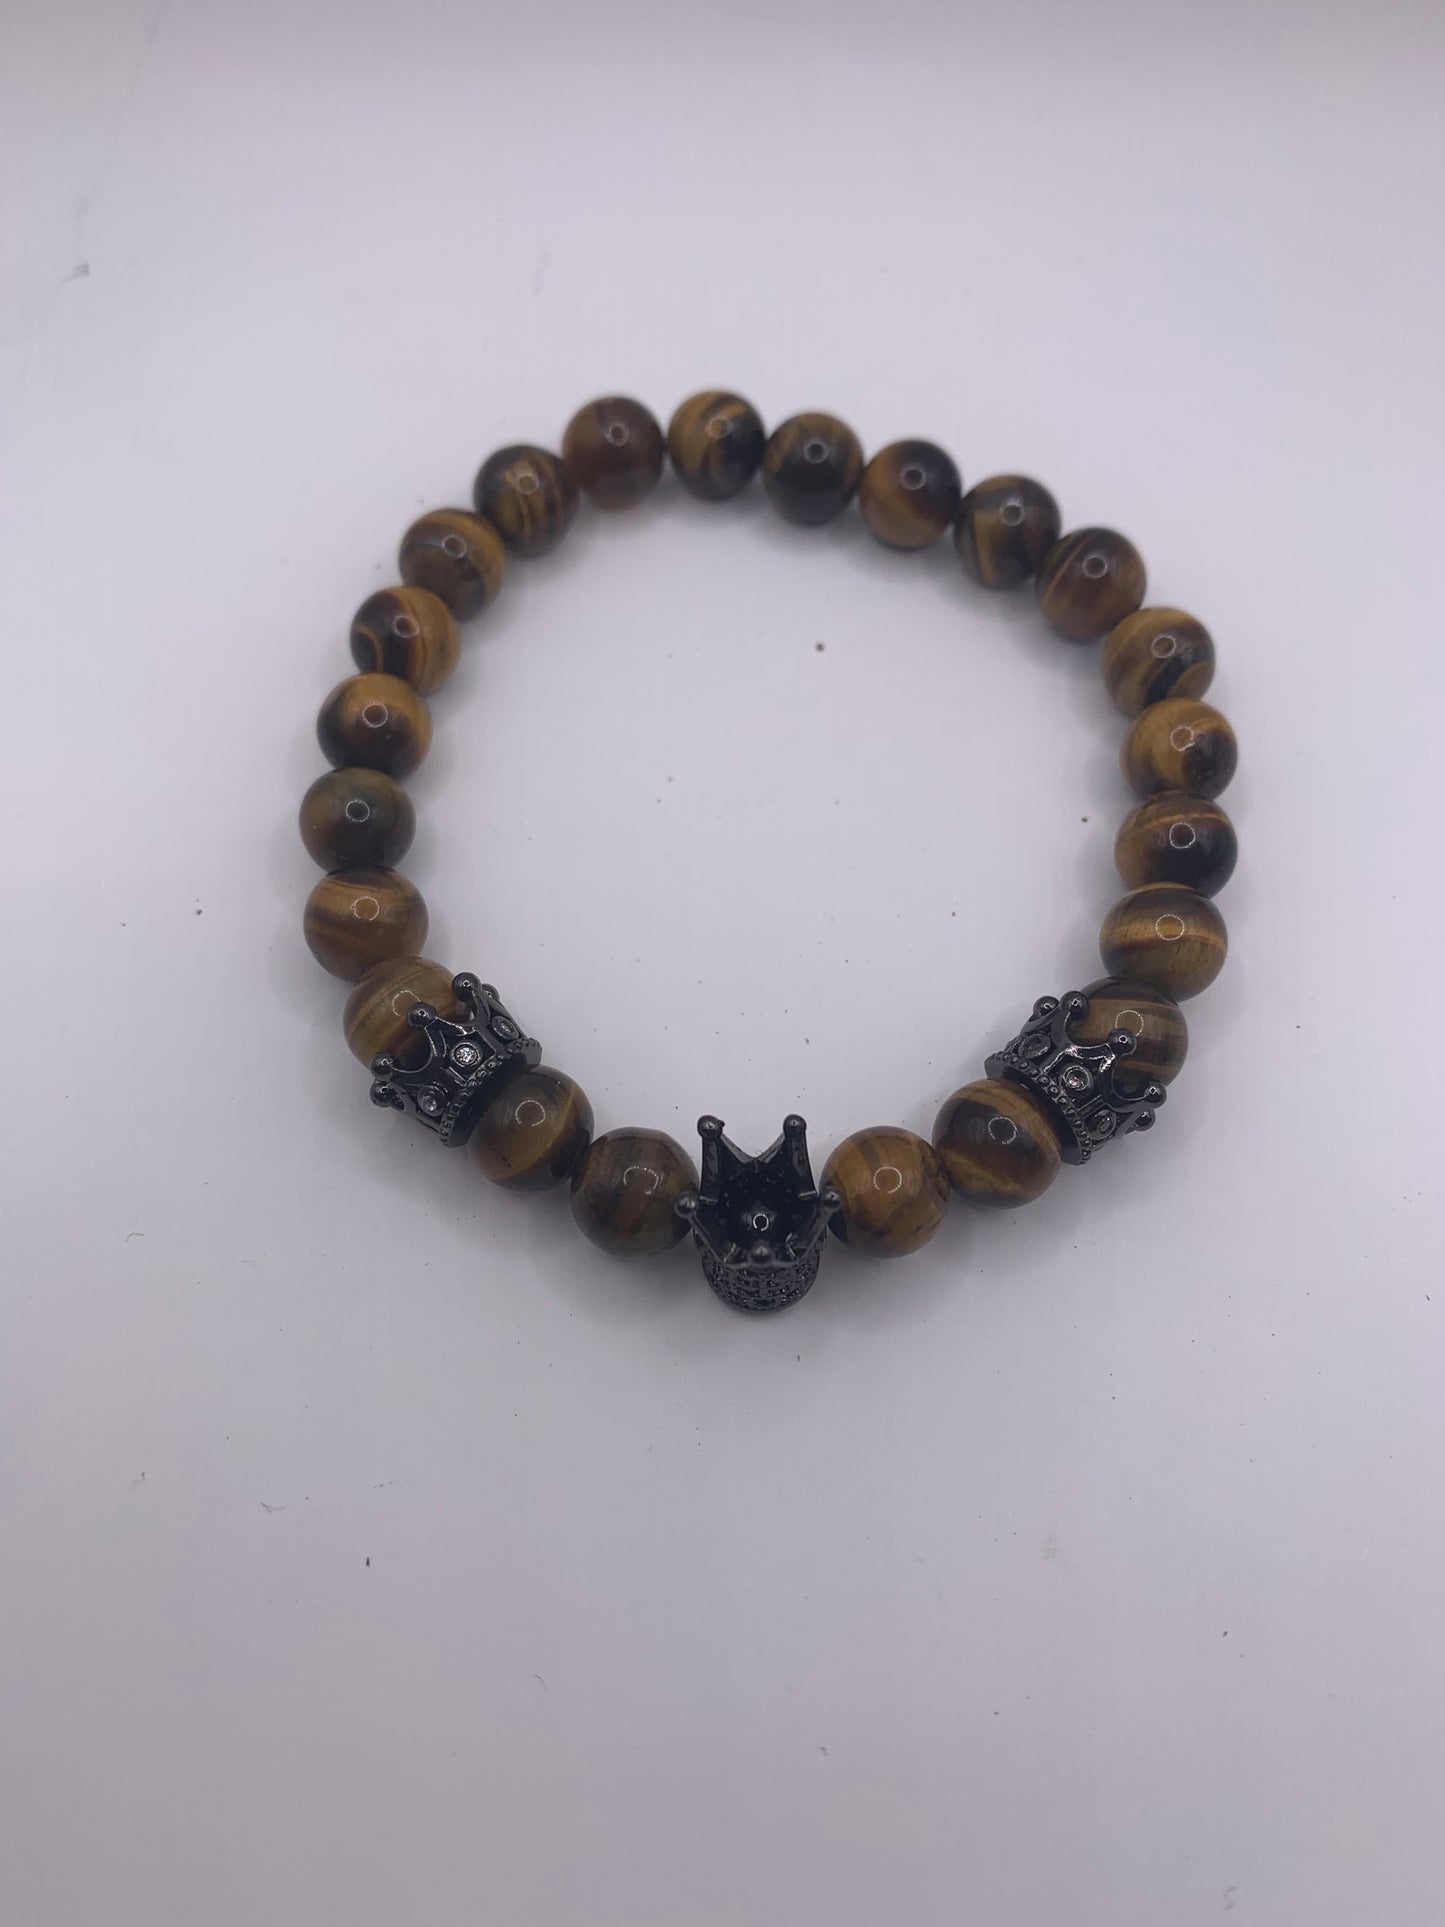 Tiger eye healing bracelets with black onyx, crowned spacers